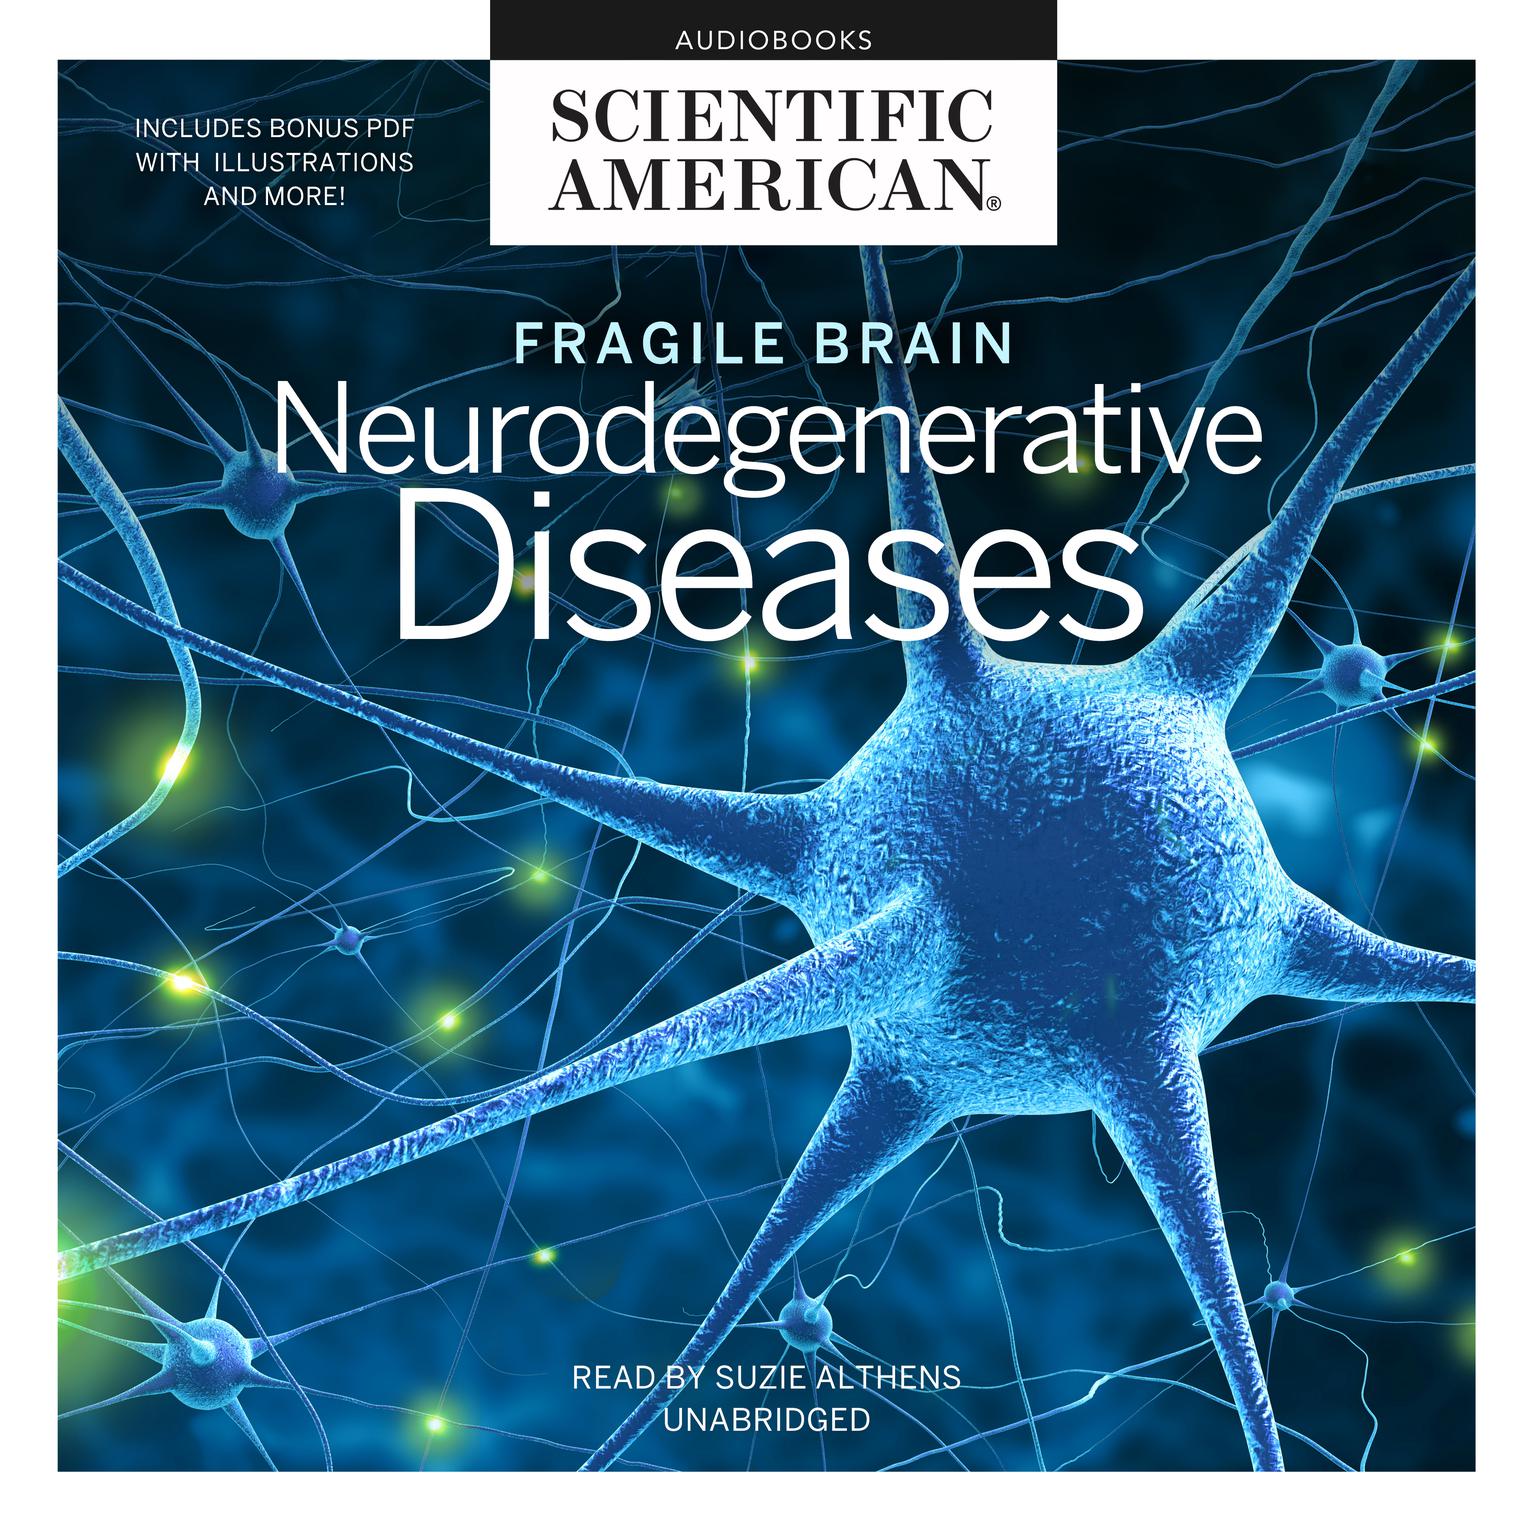 Fragile Brain: Neurodegenerative Diseases Audiobook, by Scientific American